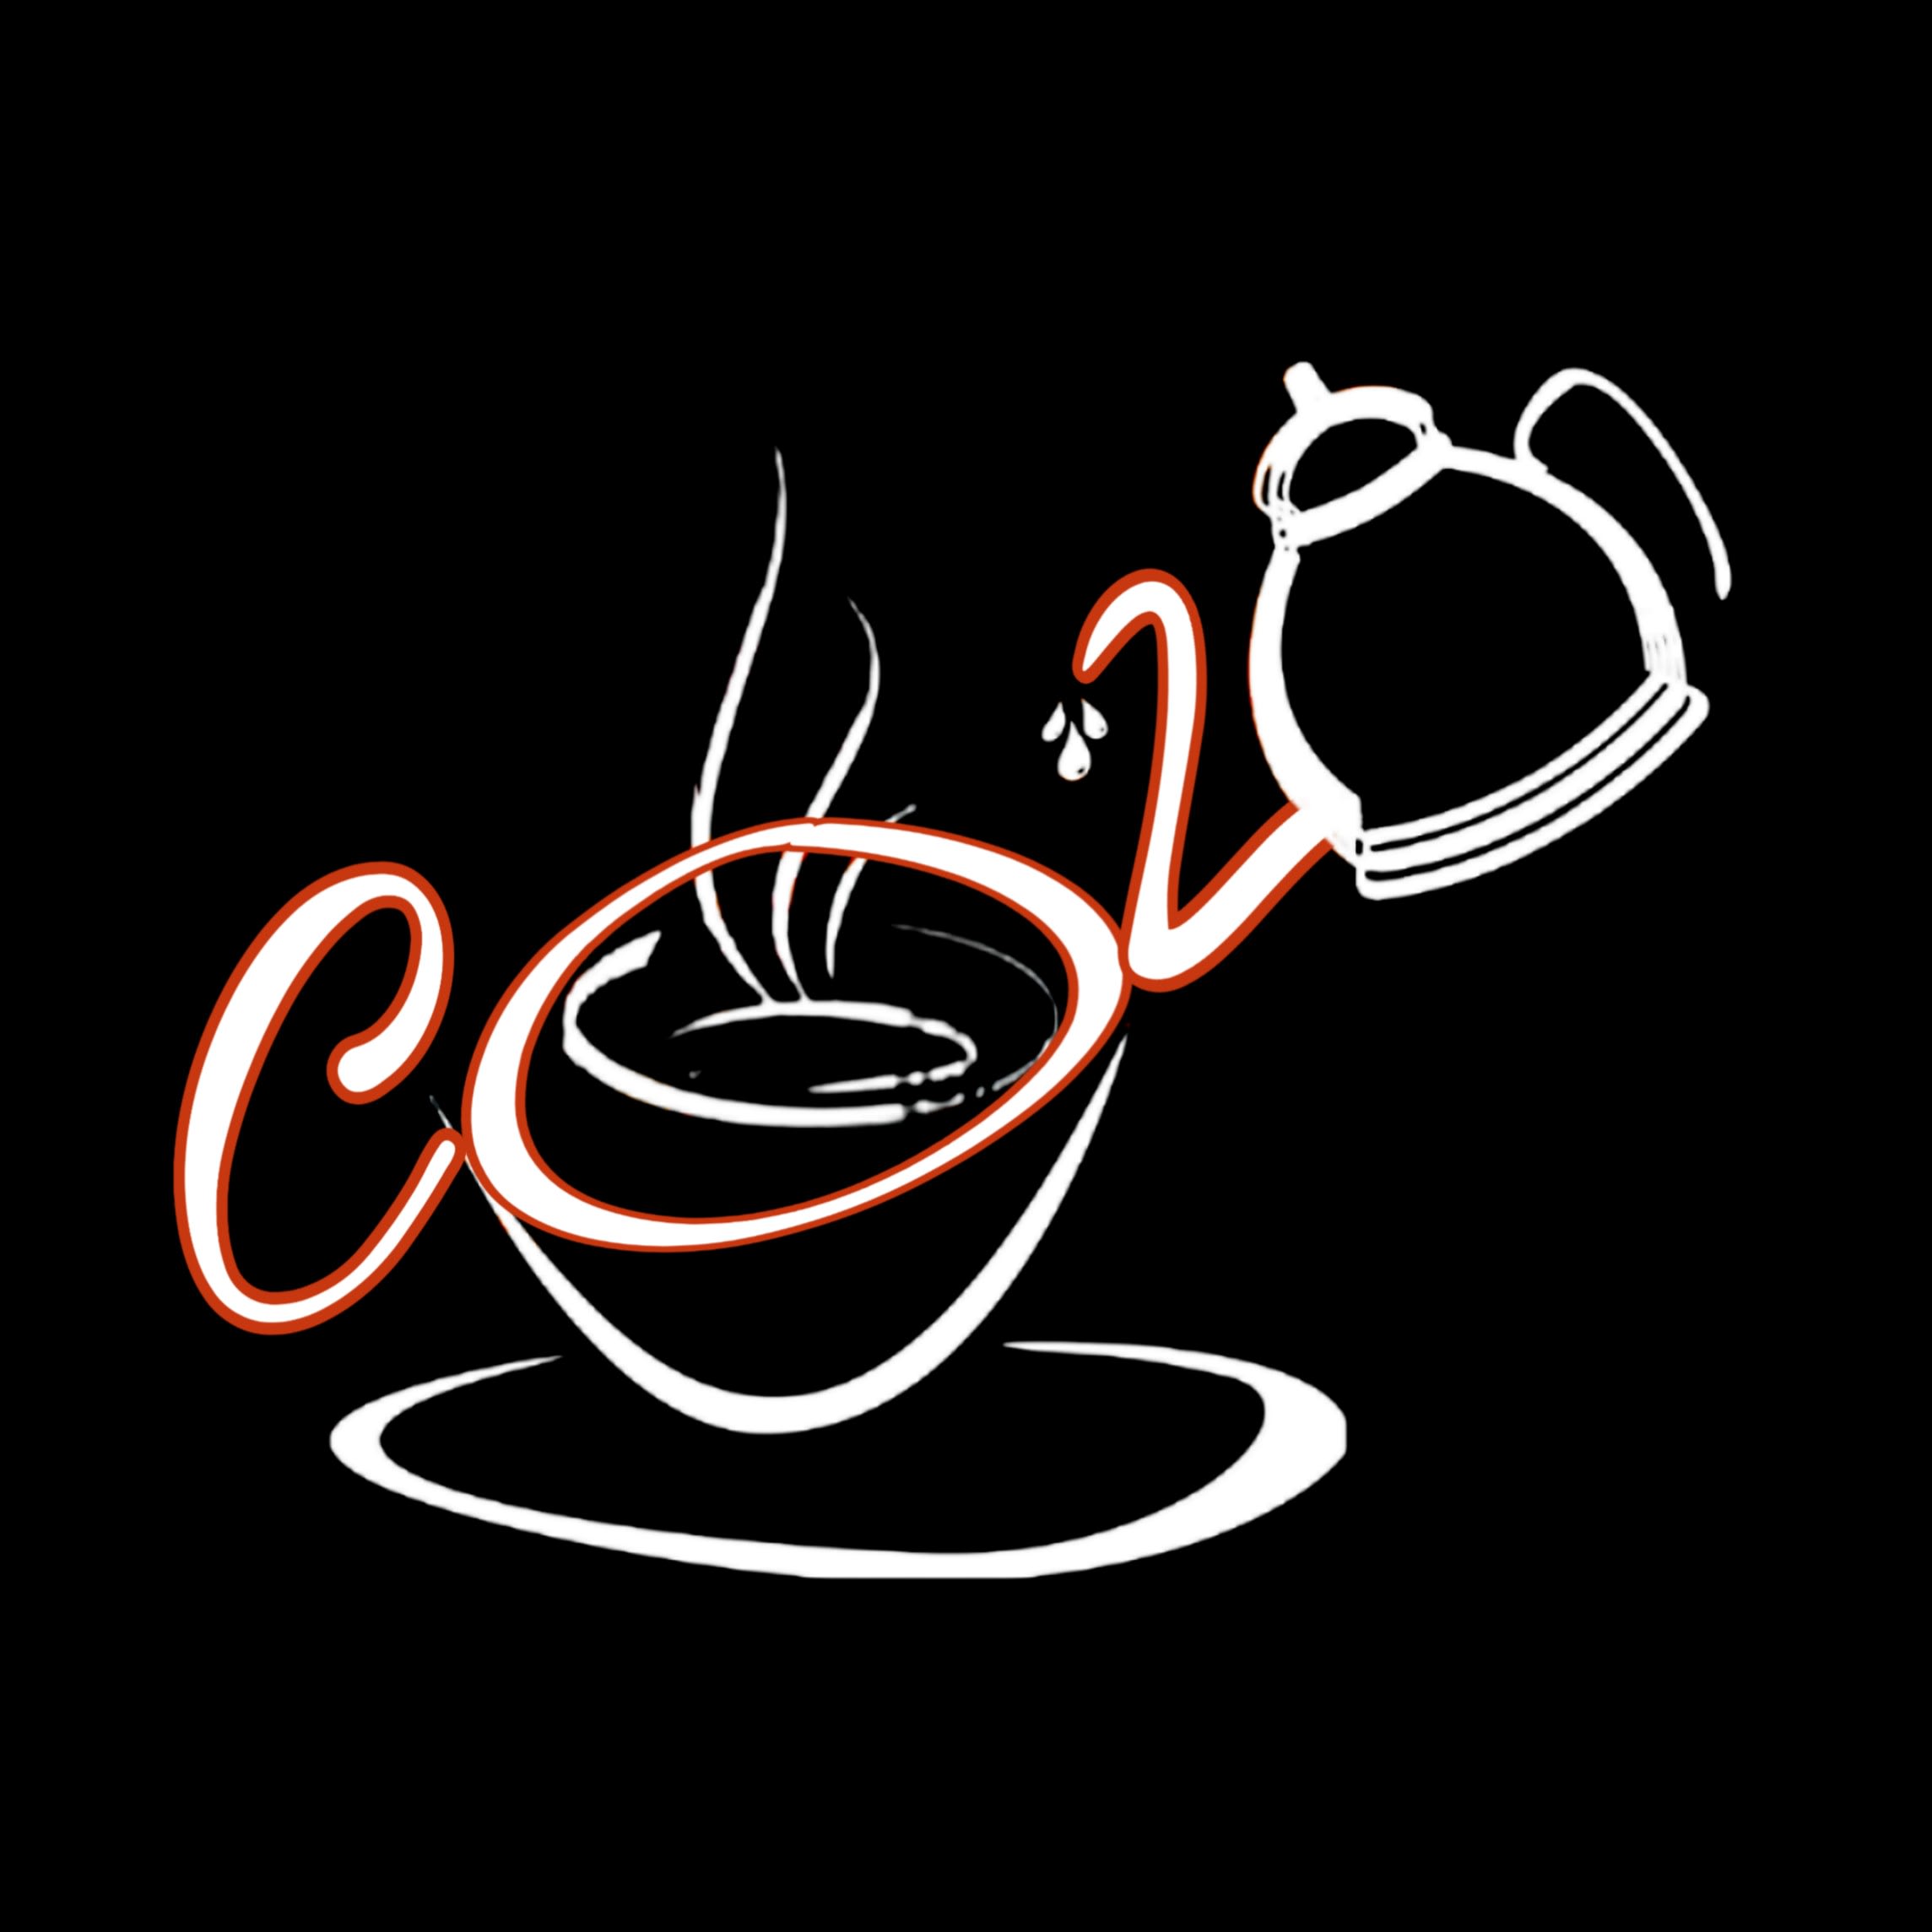 Café CO2